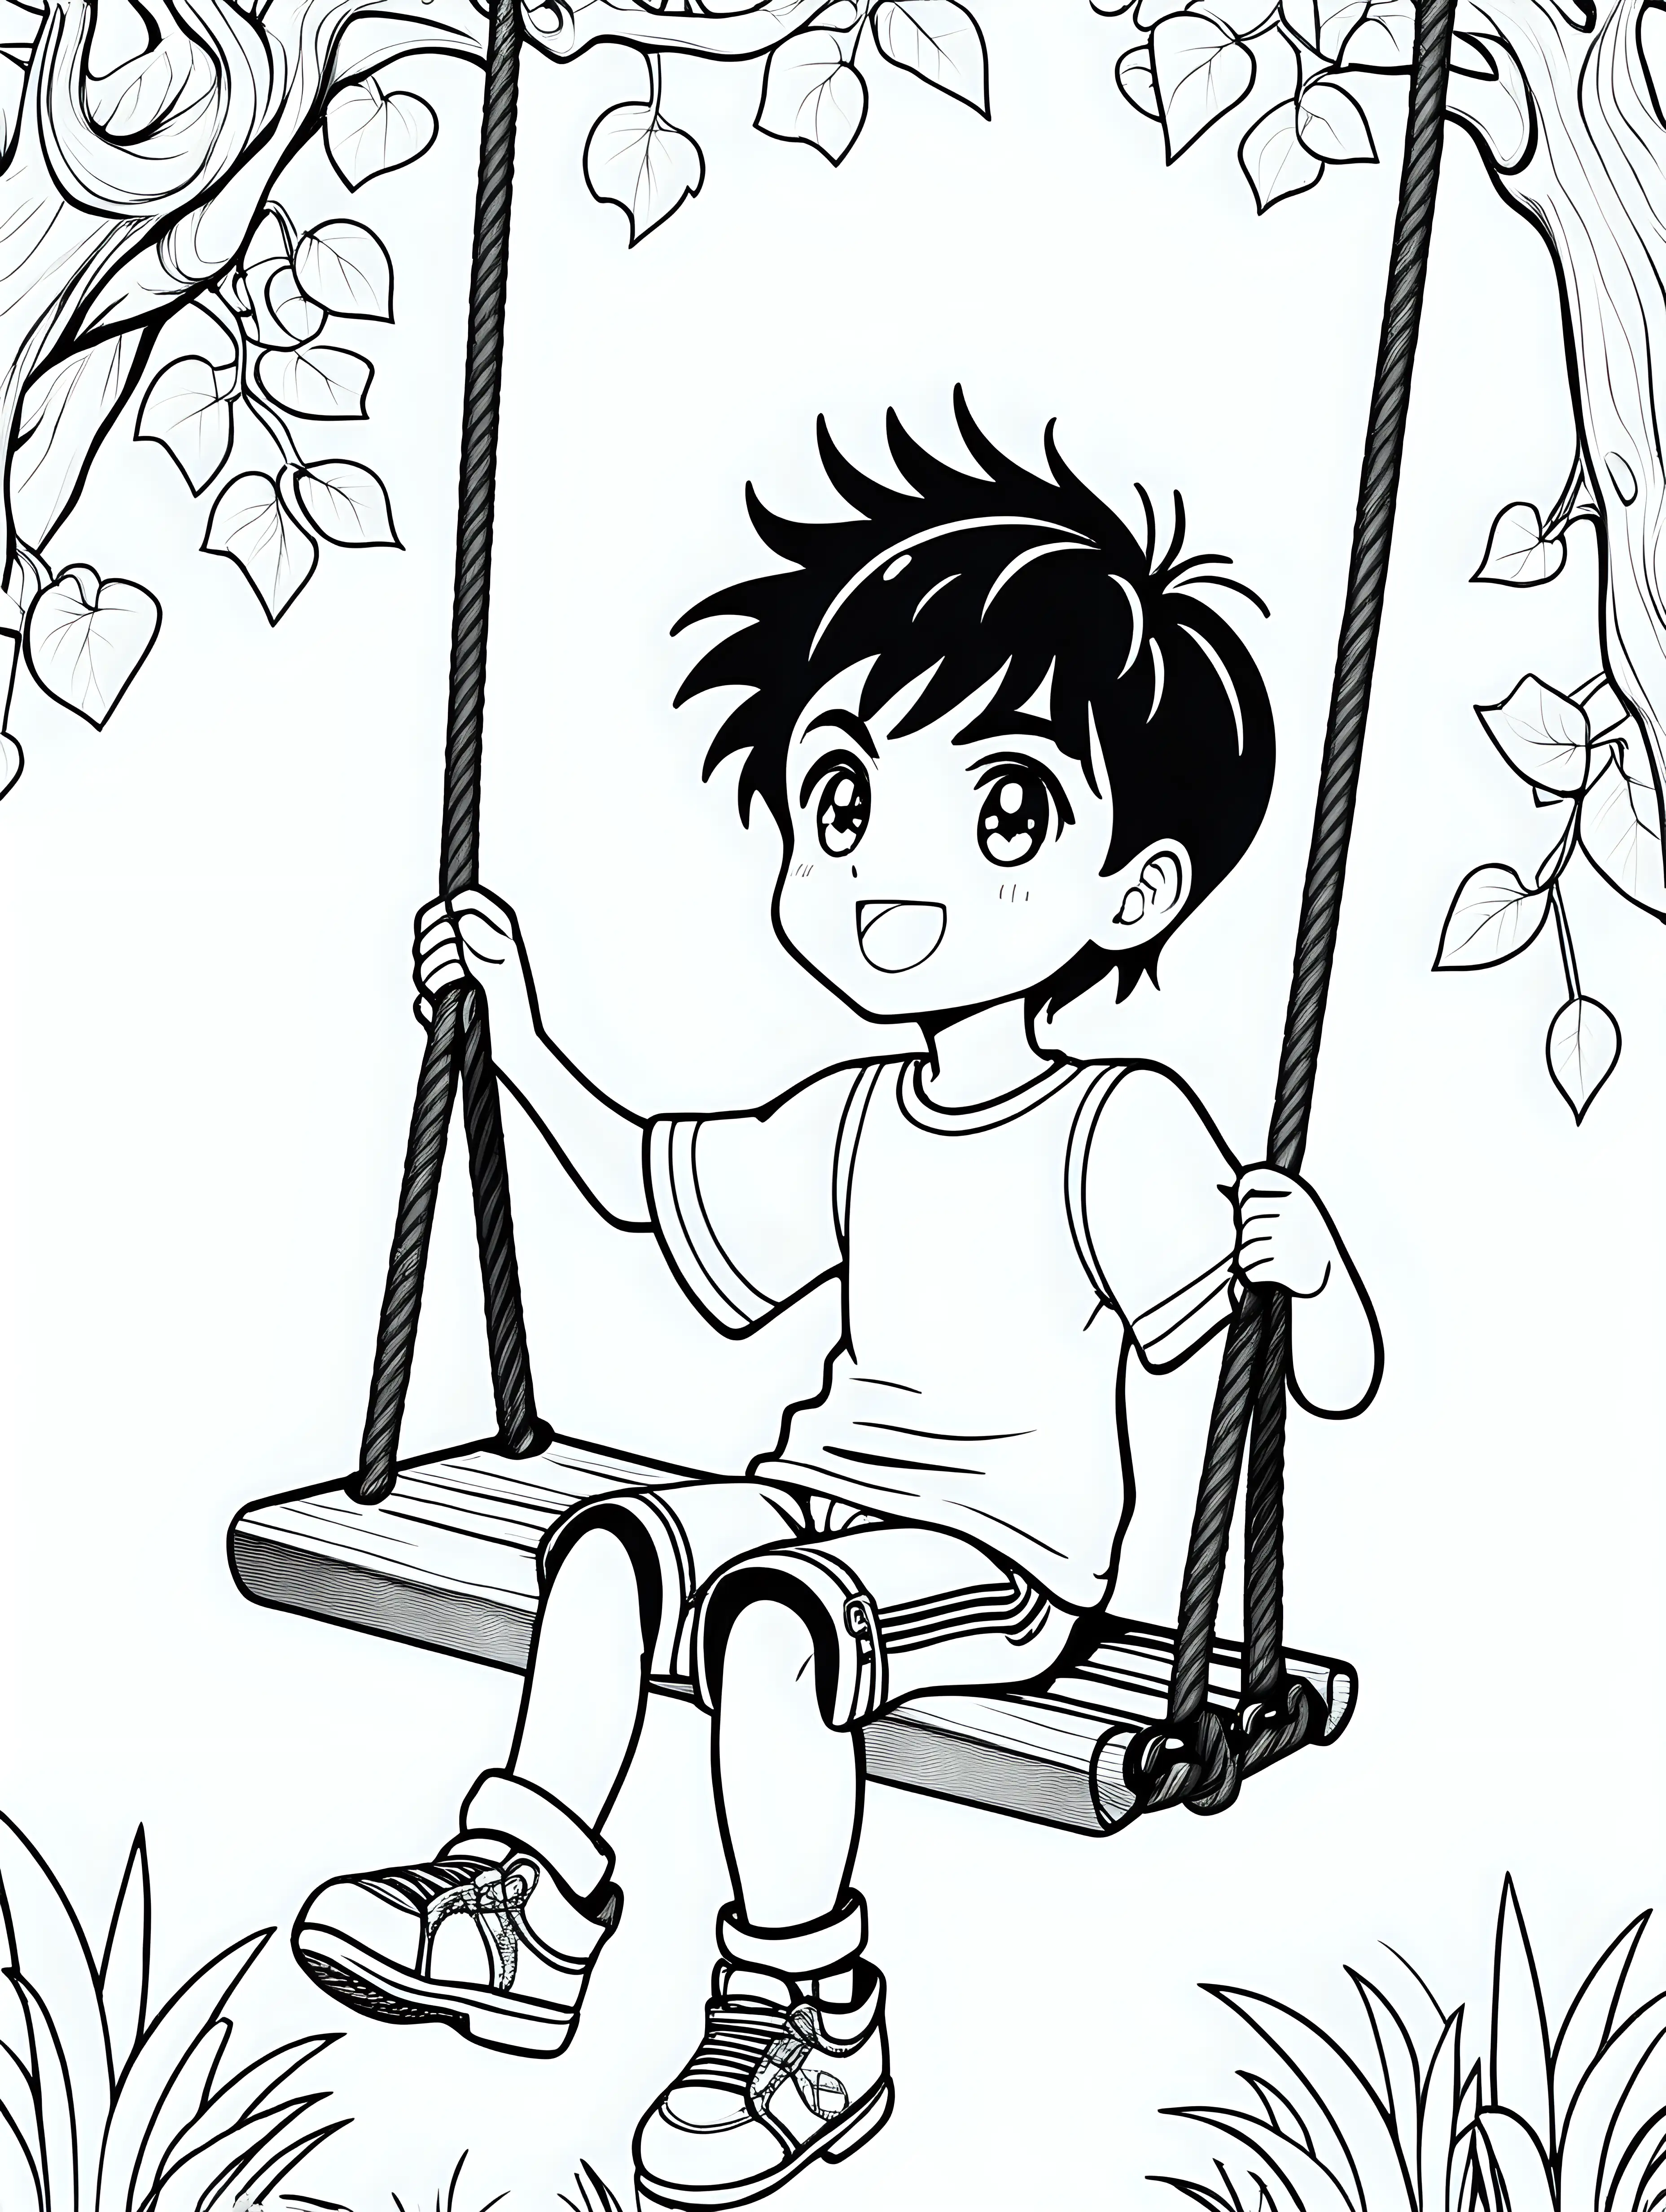 Cute Manga Boy on Swing Coloring Page